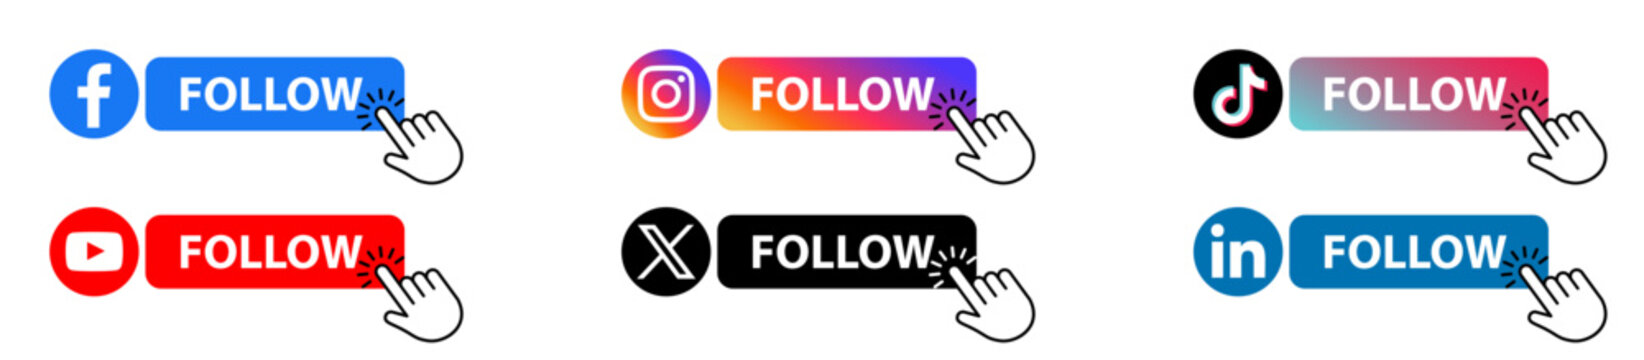 Social Media Icons,Facebook,Instagram,Telegram,Viber,YouTube,TikTok,Twitter with qr code ,follow us on social media with Hand cursor click symbol .QR Code Scanner. Vector Editorial
